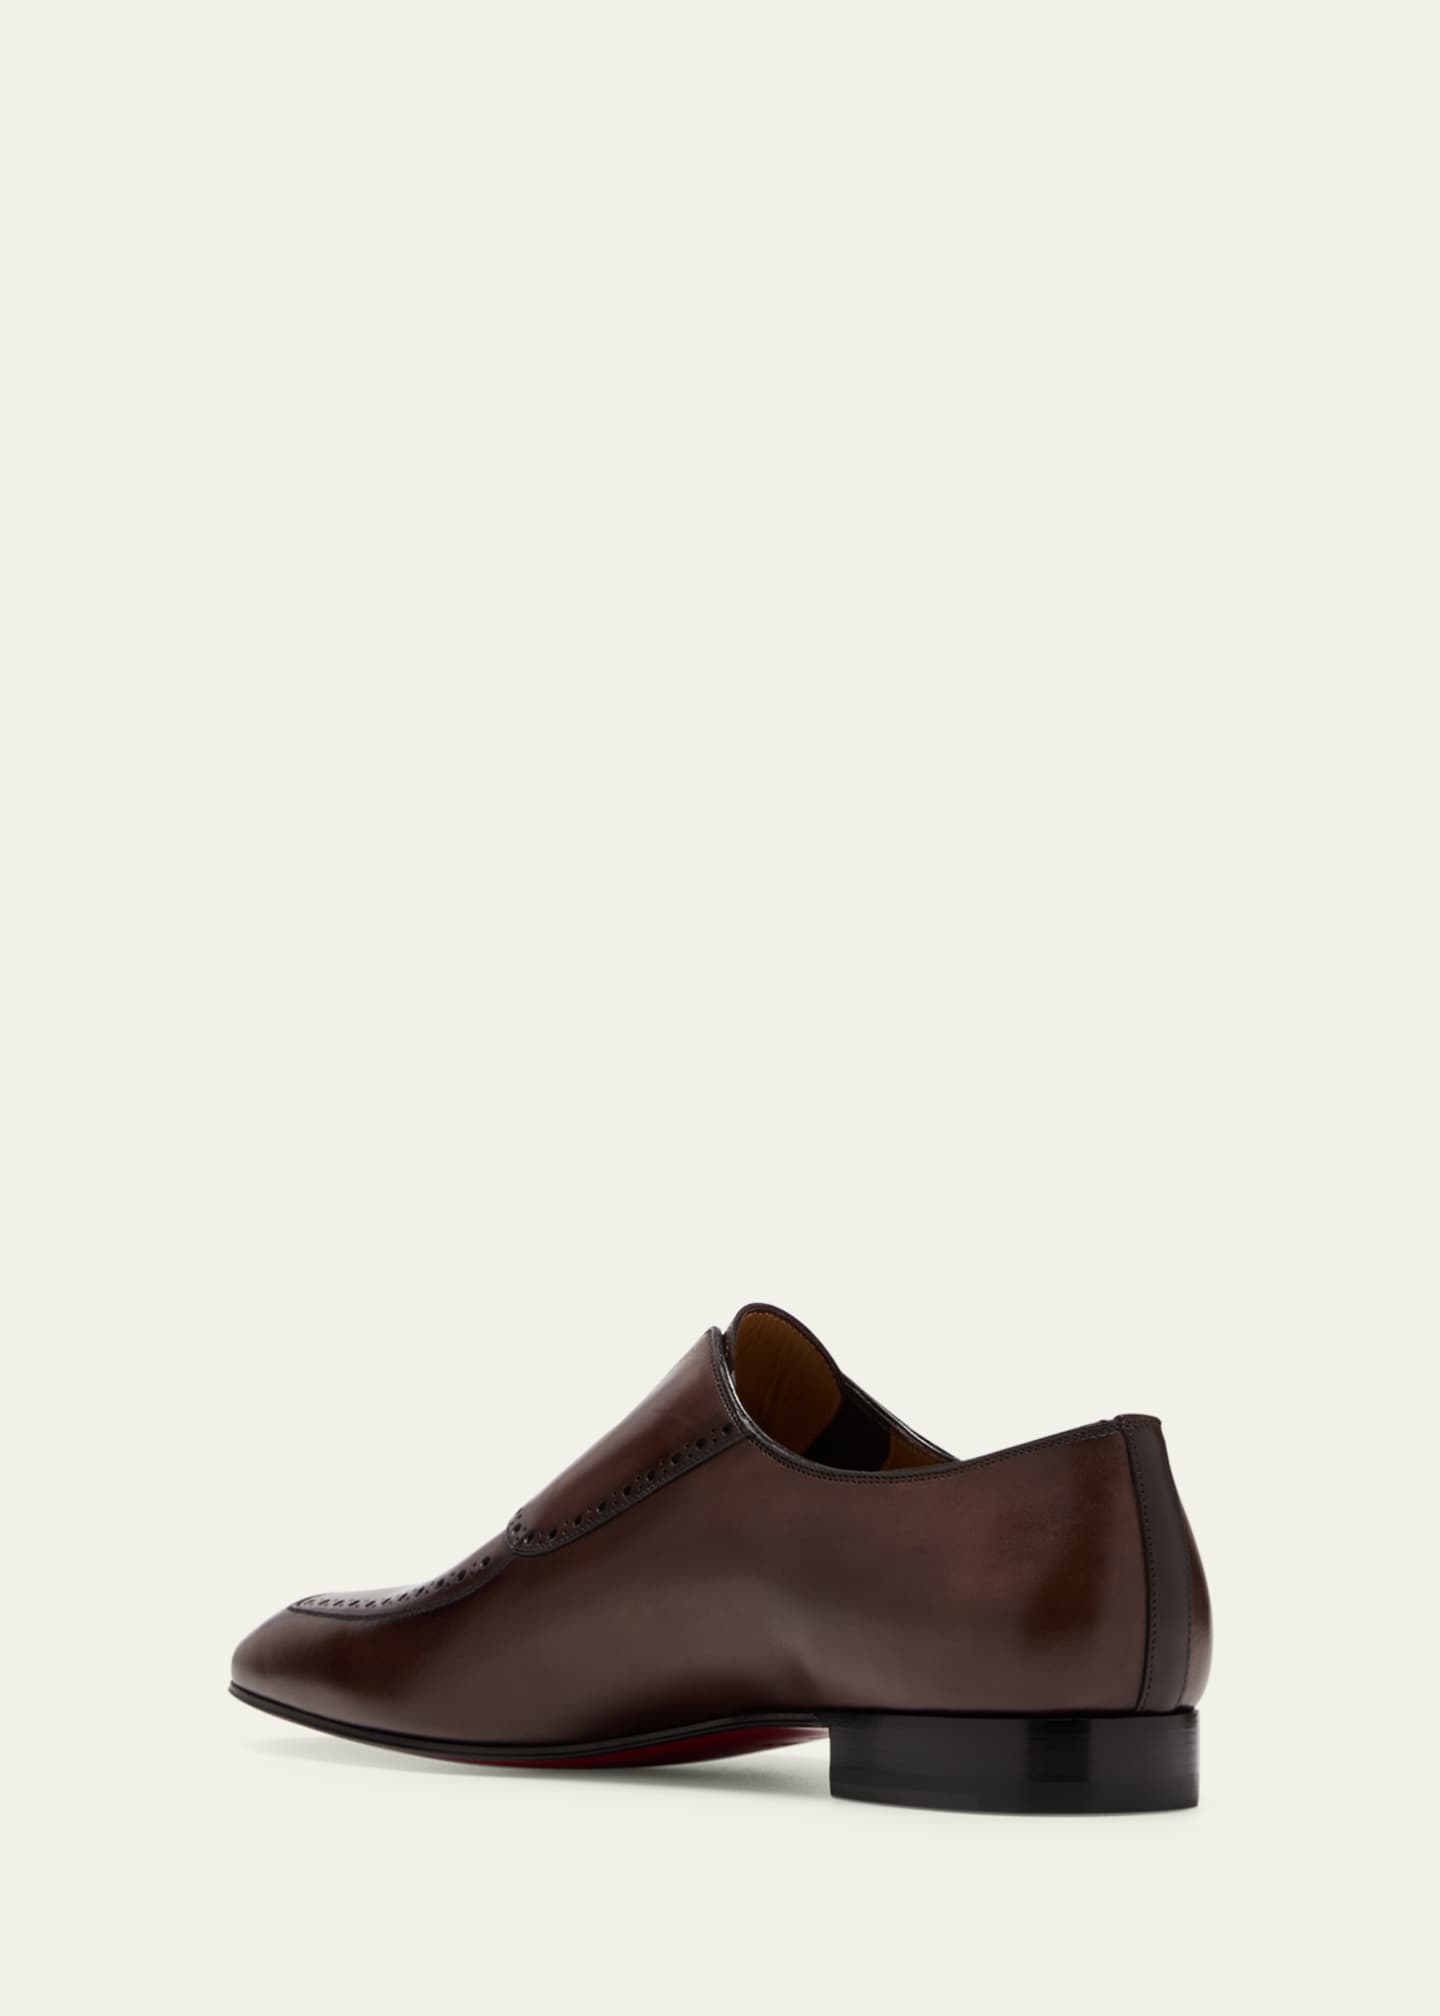 Christian Louboutin Men's Lafitte Leather Oxford Shoes